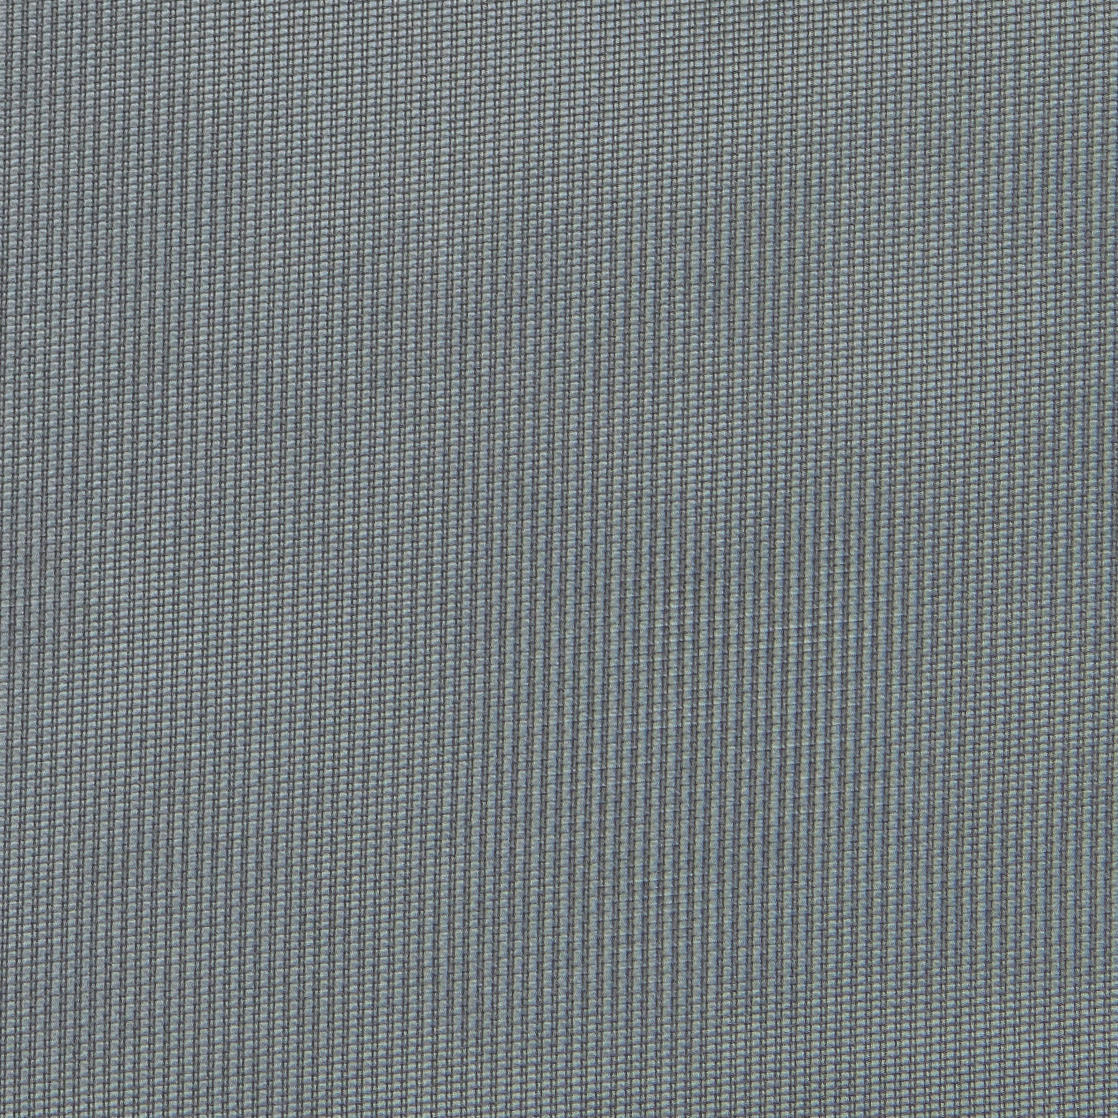 Ösenvorhang Micha silber B/L: ca. 135x235 cm Micha - silber (135,00/235,00cm)